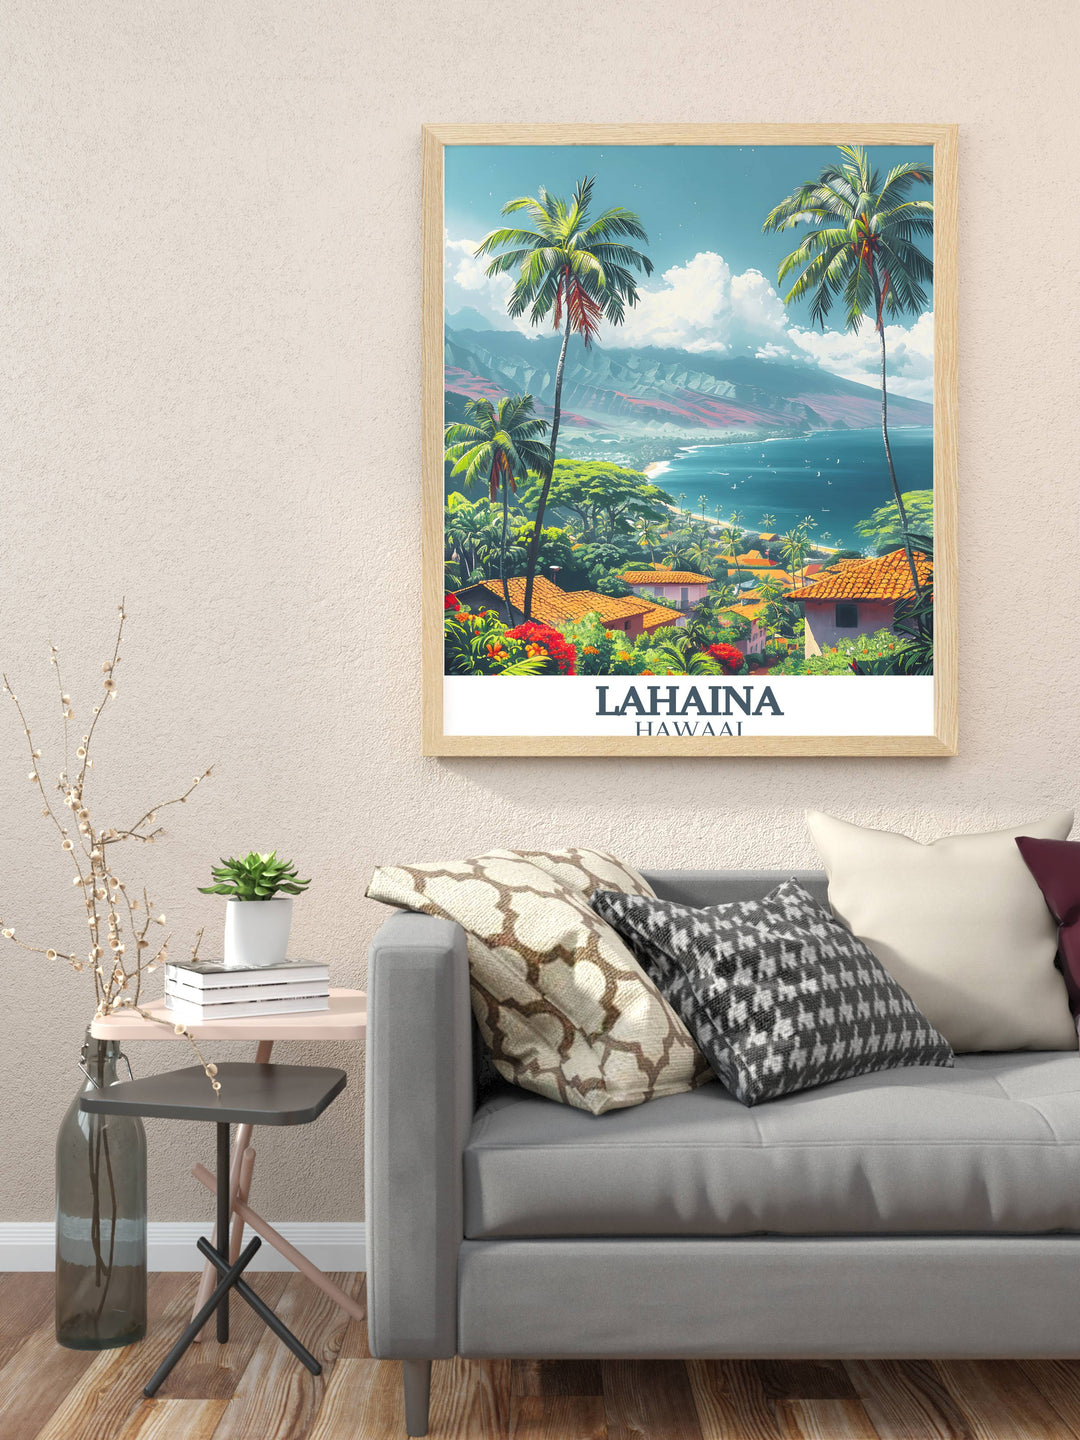 Lahaina Hawaii Art Prints - Lahaina Travel Prints - Collection of Lahaina Art